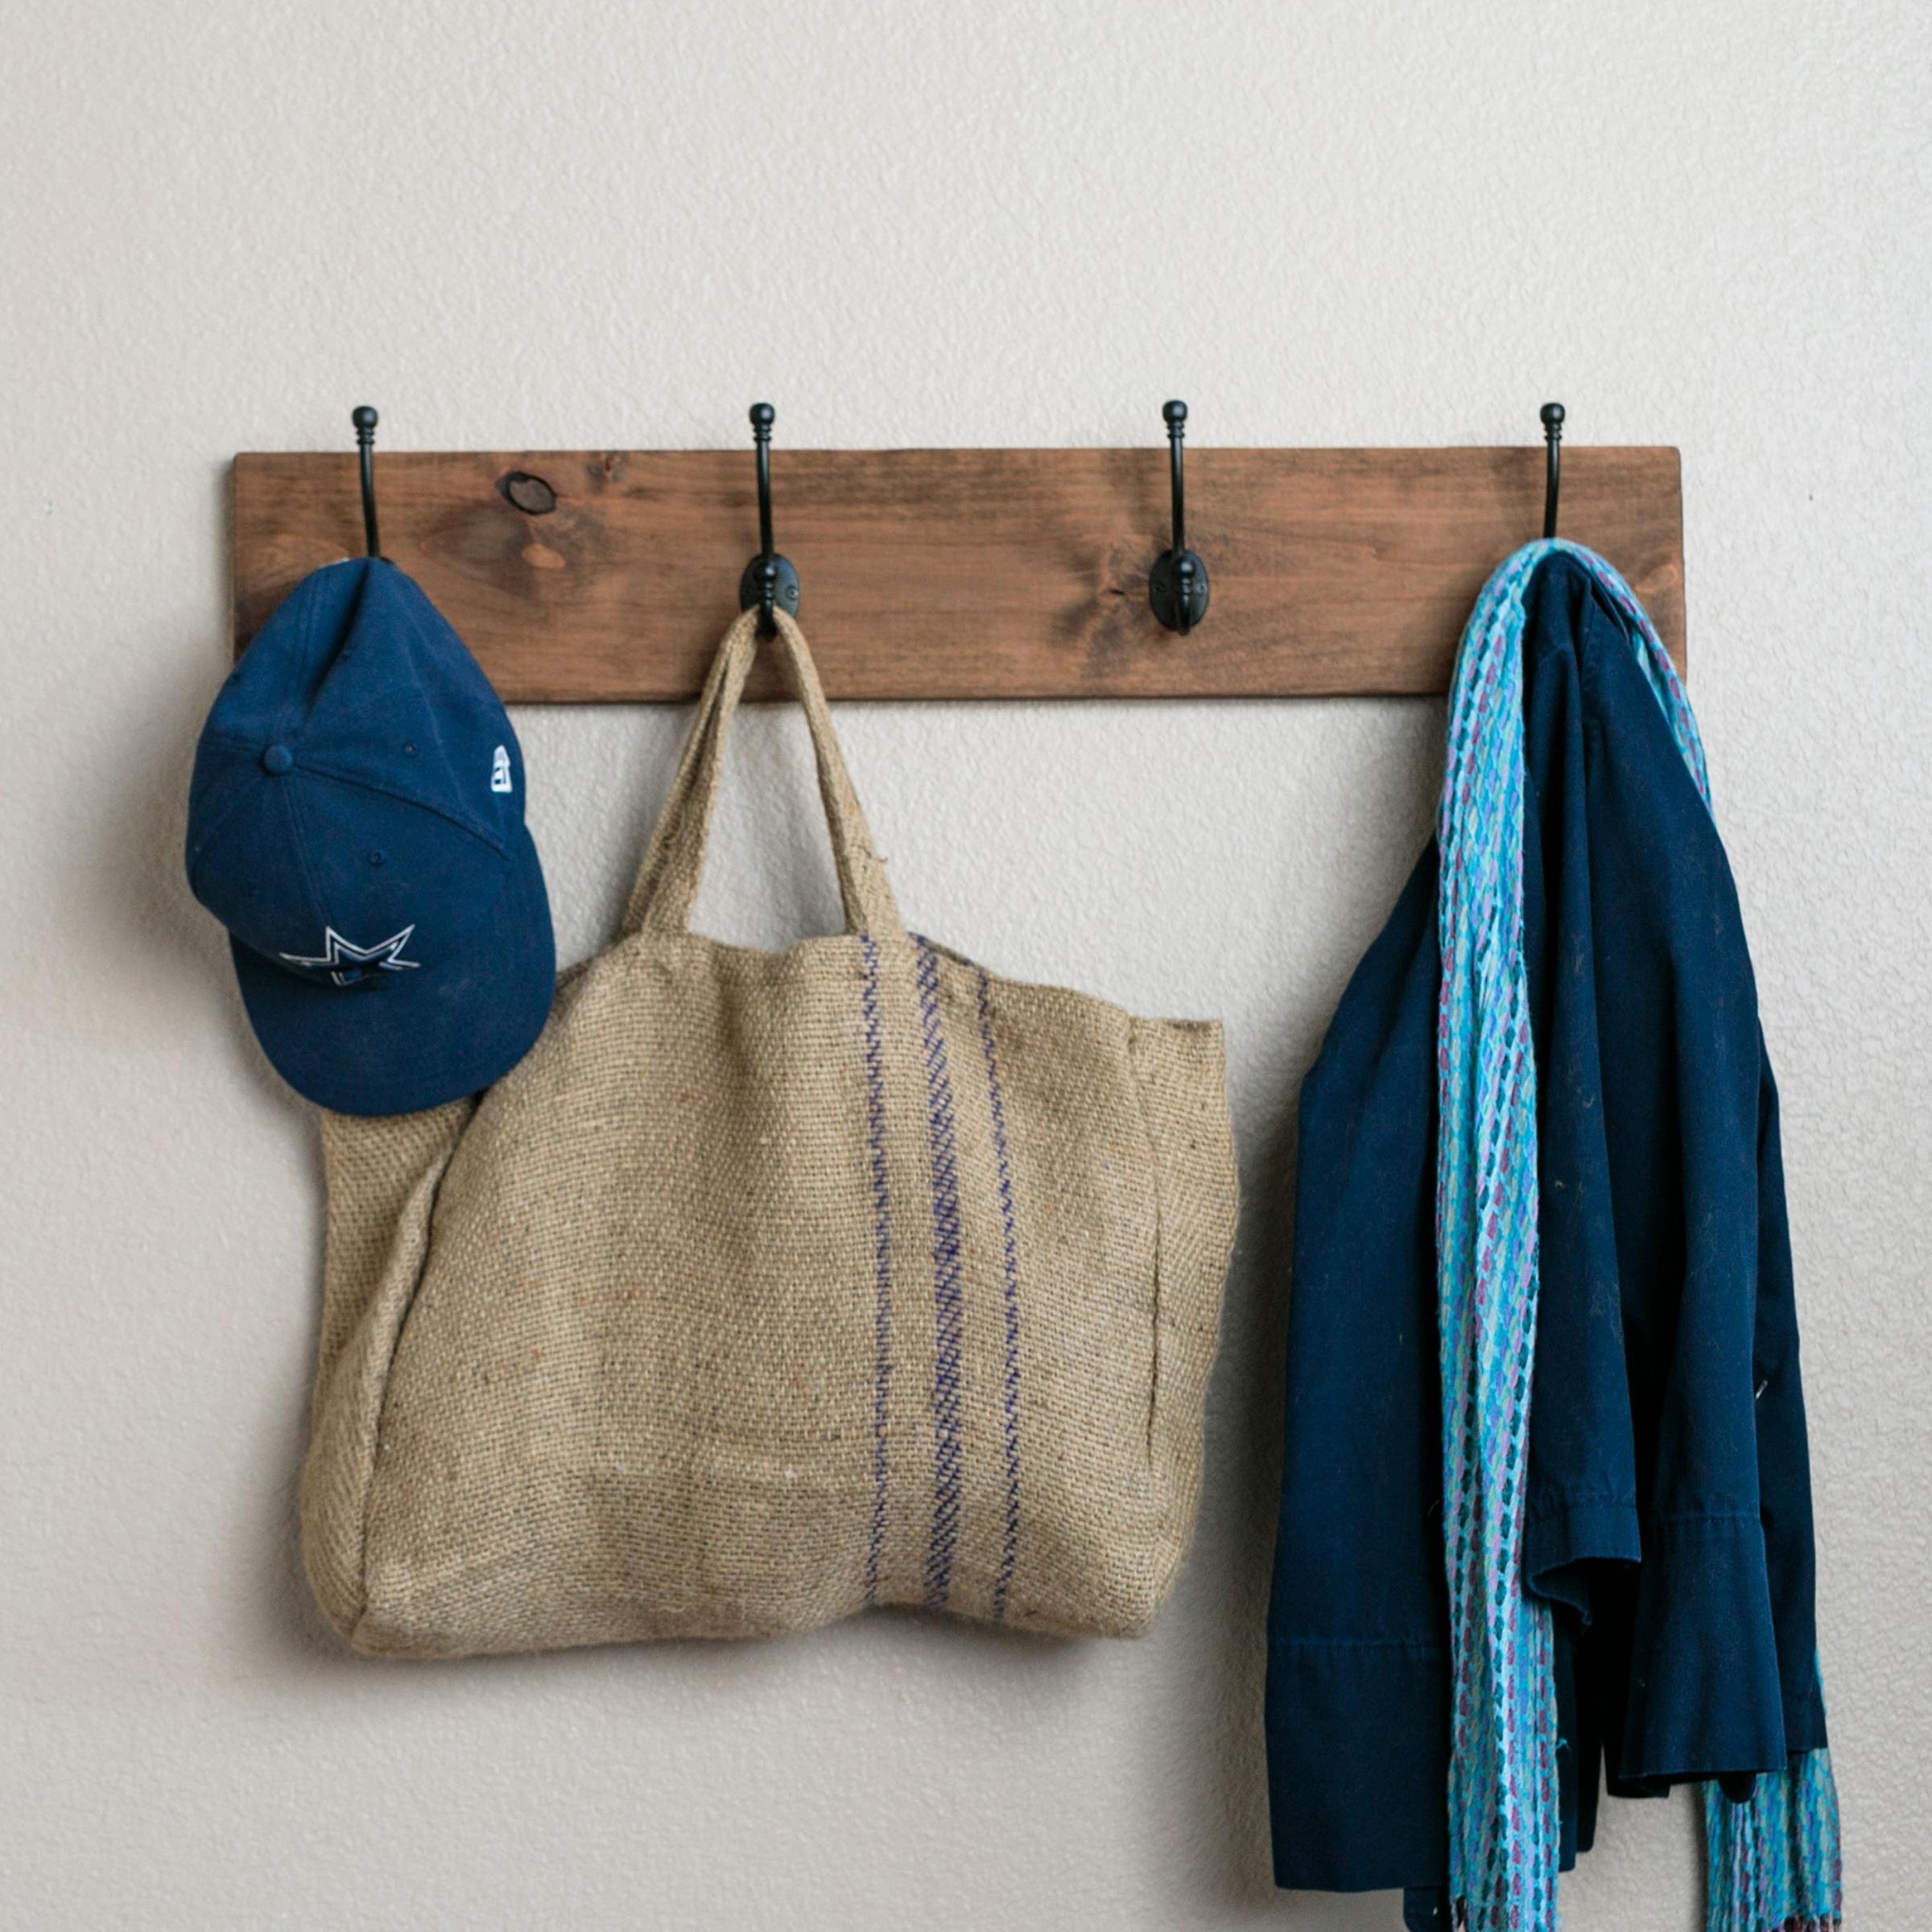 TURDORIA 4-Pack Wood Wall Hooks for Hanging - Decorative Mounted Hooks for Towel Heavy Duty Coats - Robe, Backpack (Walnut)